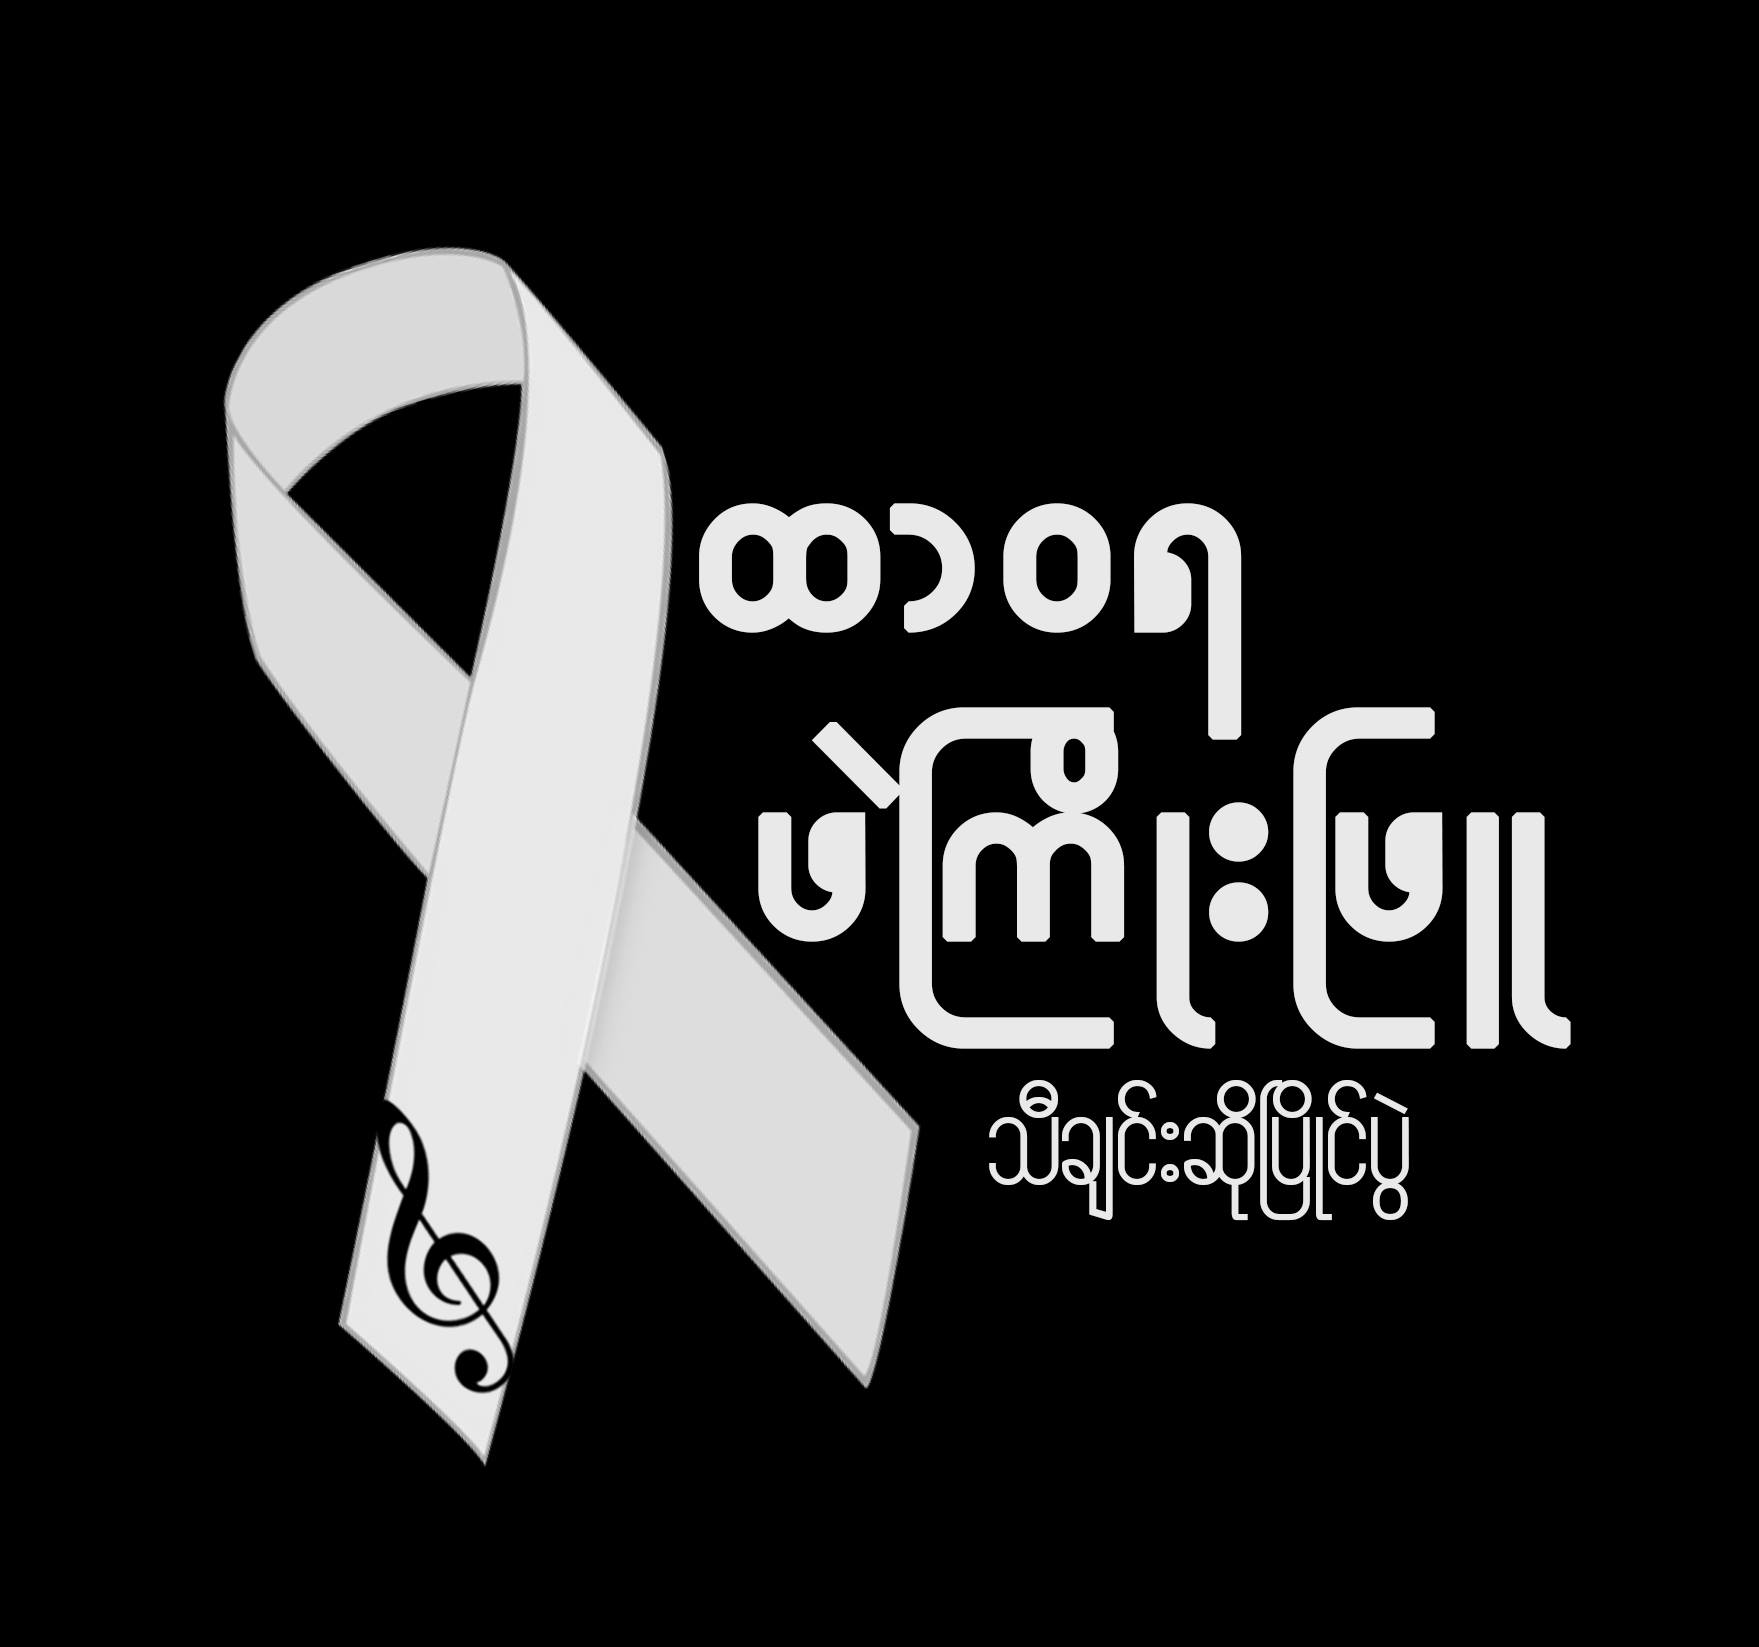 Promotion for the "Forever White Ribbon" singing contest in Burmese. (Photo: White Ribbon Myanmar / Facebook)